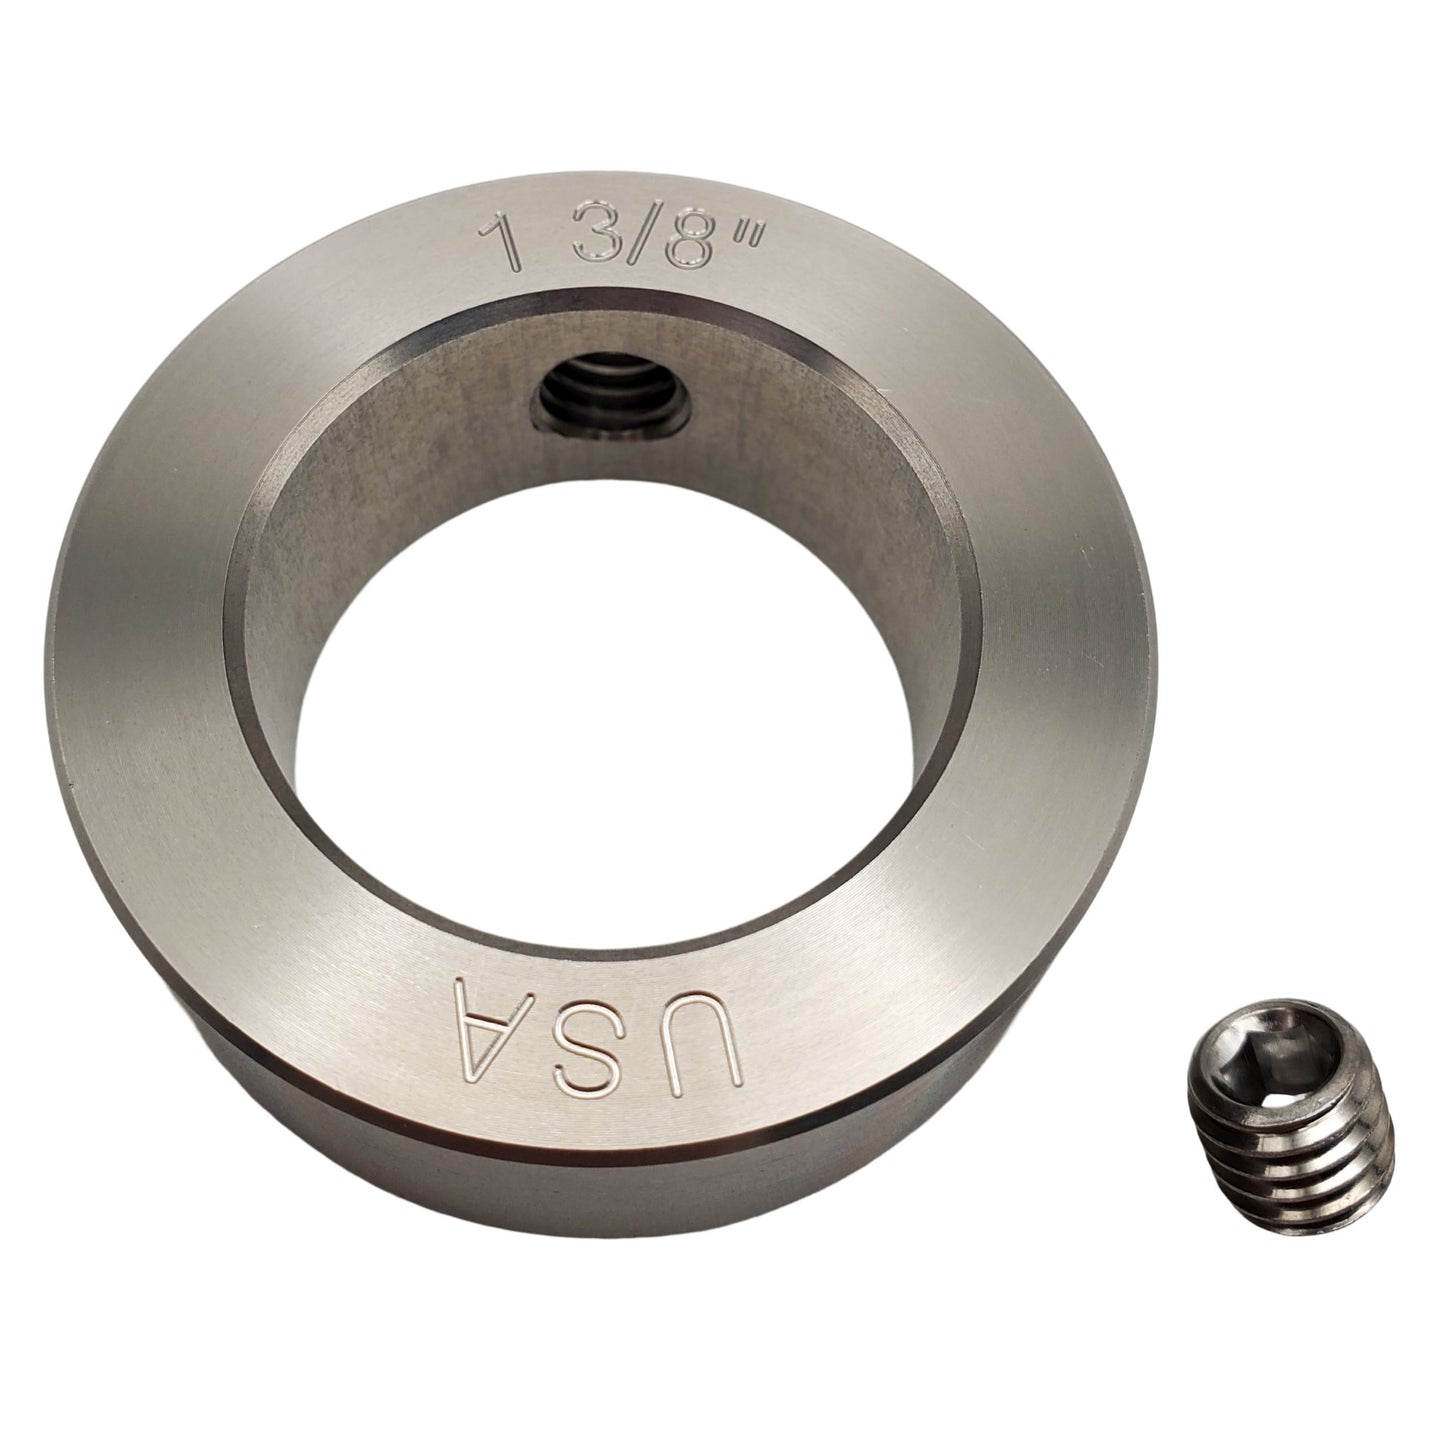 1.375" Diameter - Set Screw Shaft Collar - 303 Stainless Steel